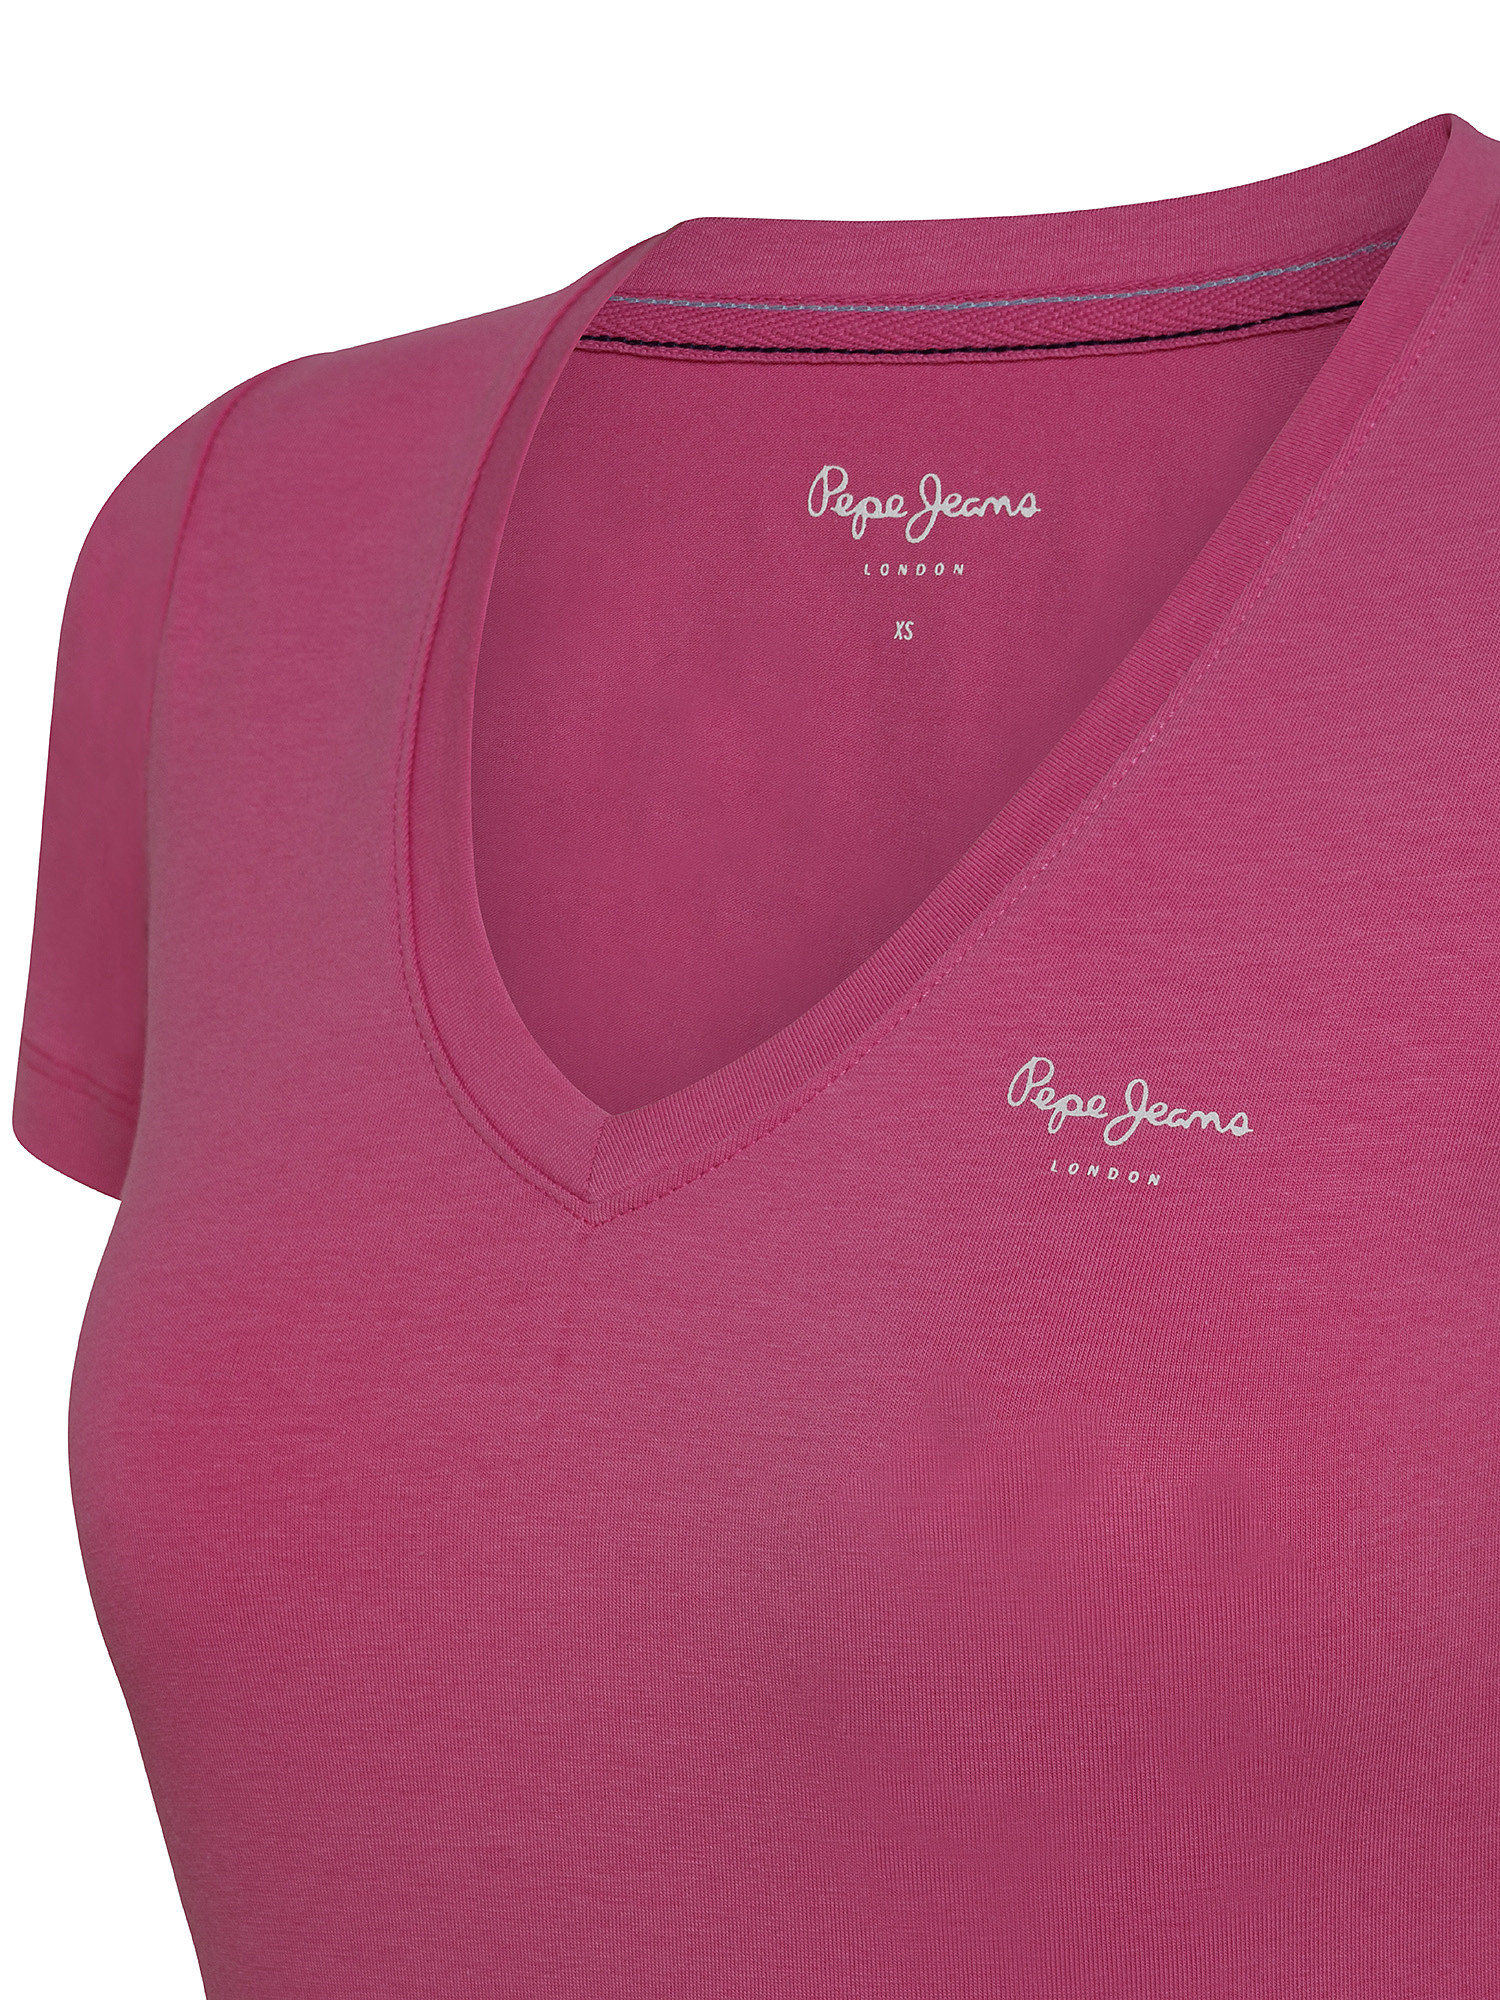 Violette cotton T-shirt, Pink Flamingo, large image number 2